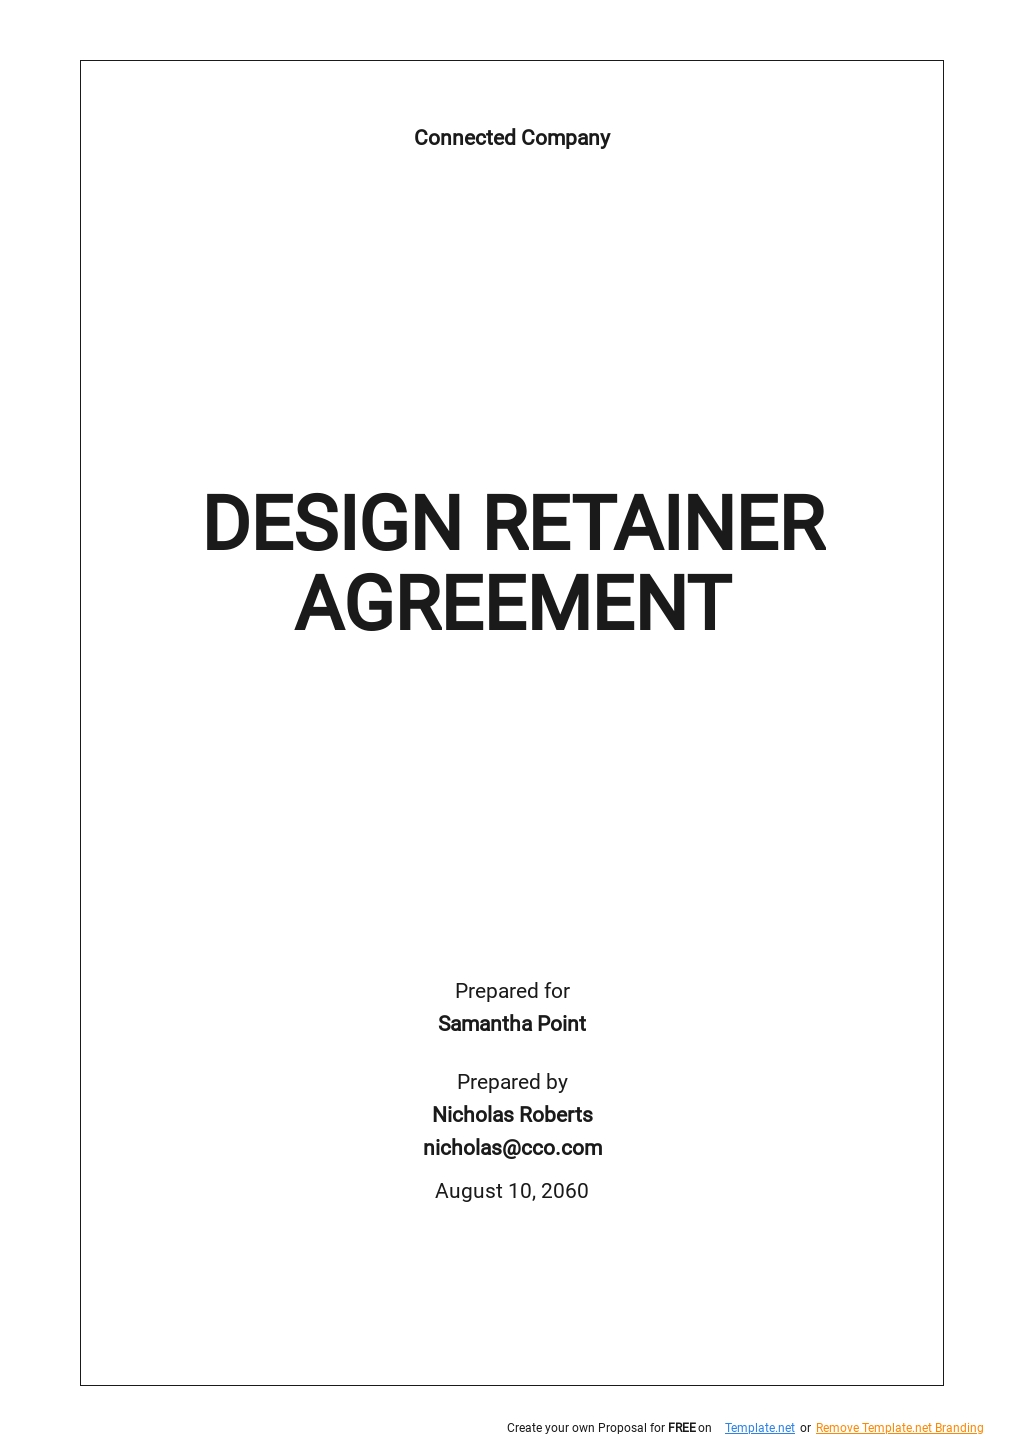 Design Retainer Agreement Template - Google Docs, Word  Template.net With Regard To design retainer agreement templates